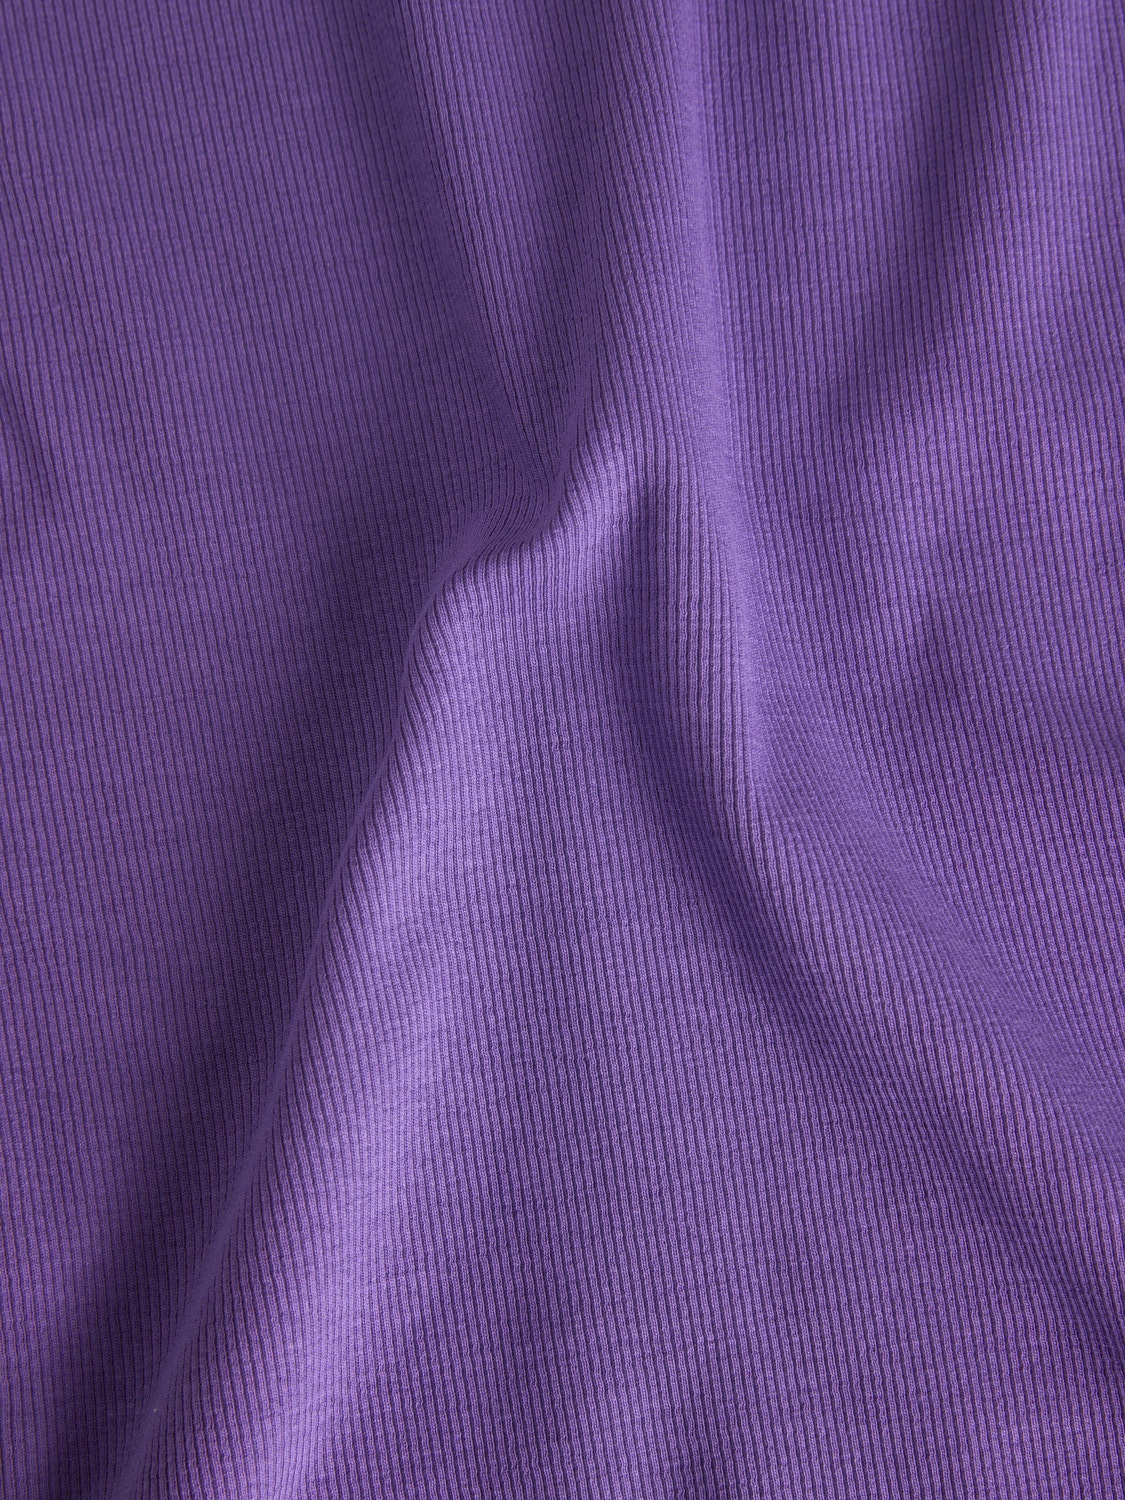 JJXX JXFOREST Dress -Royal Lilac - 12224660